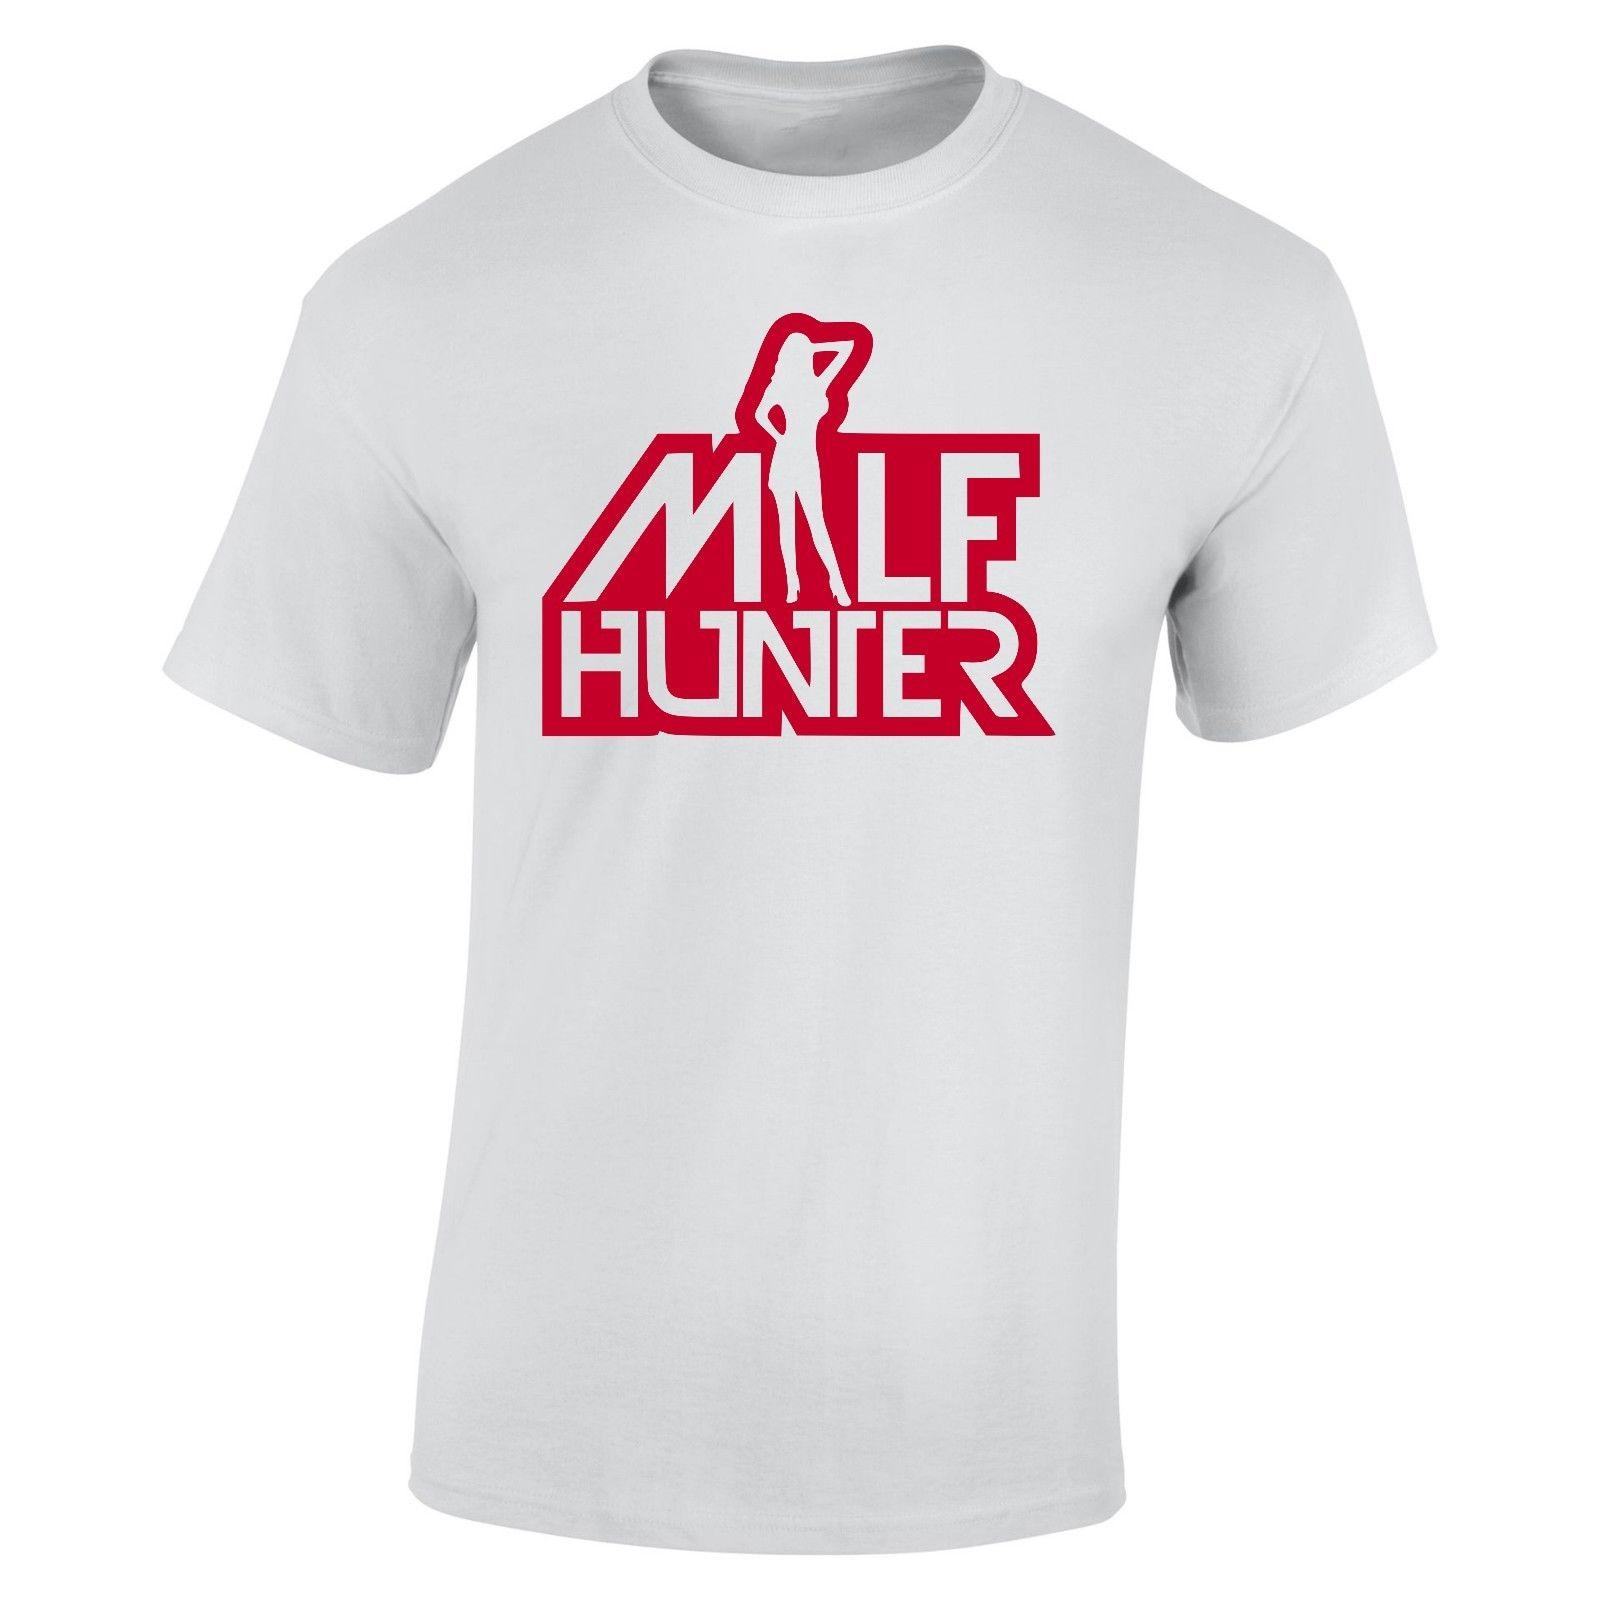 best of Milf tshirts sales Who